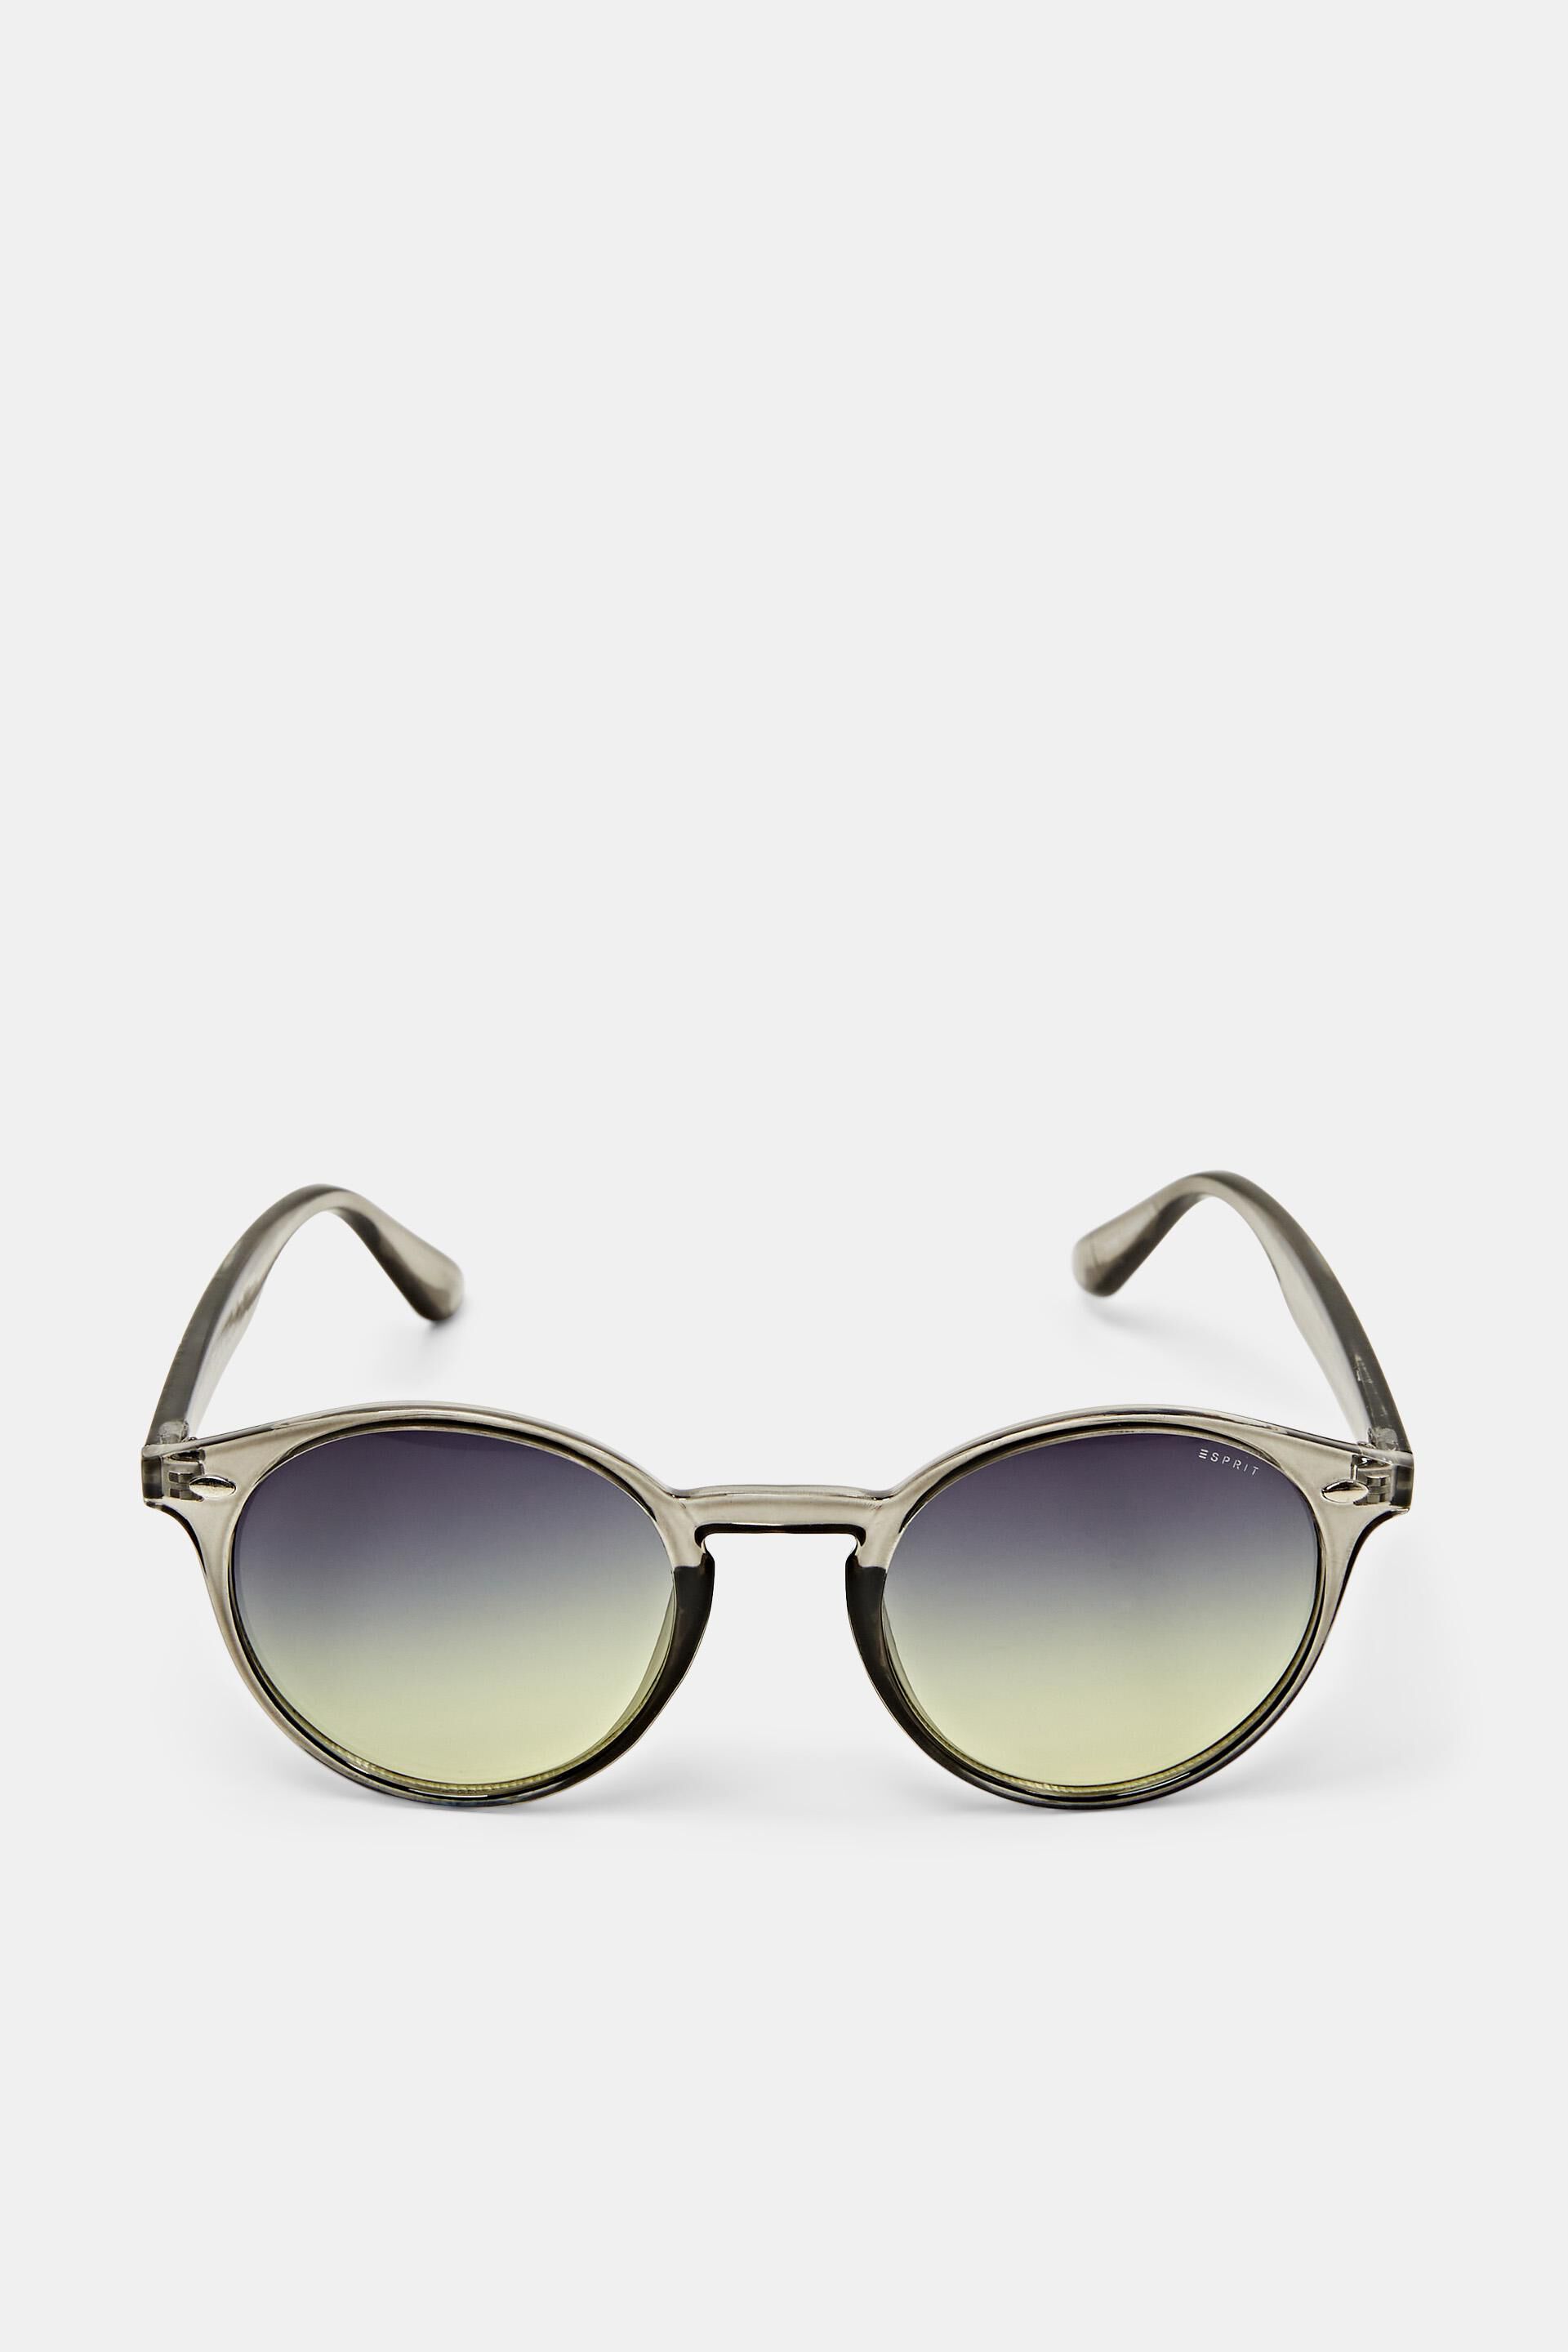 Esprit Online Store Sunglasses with round lenses